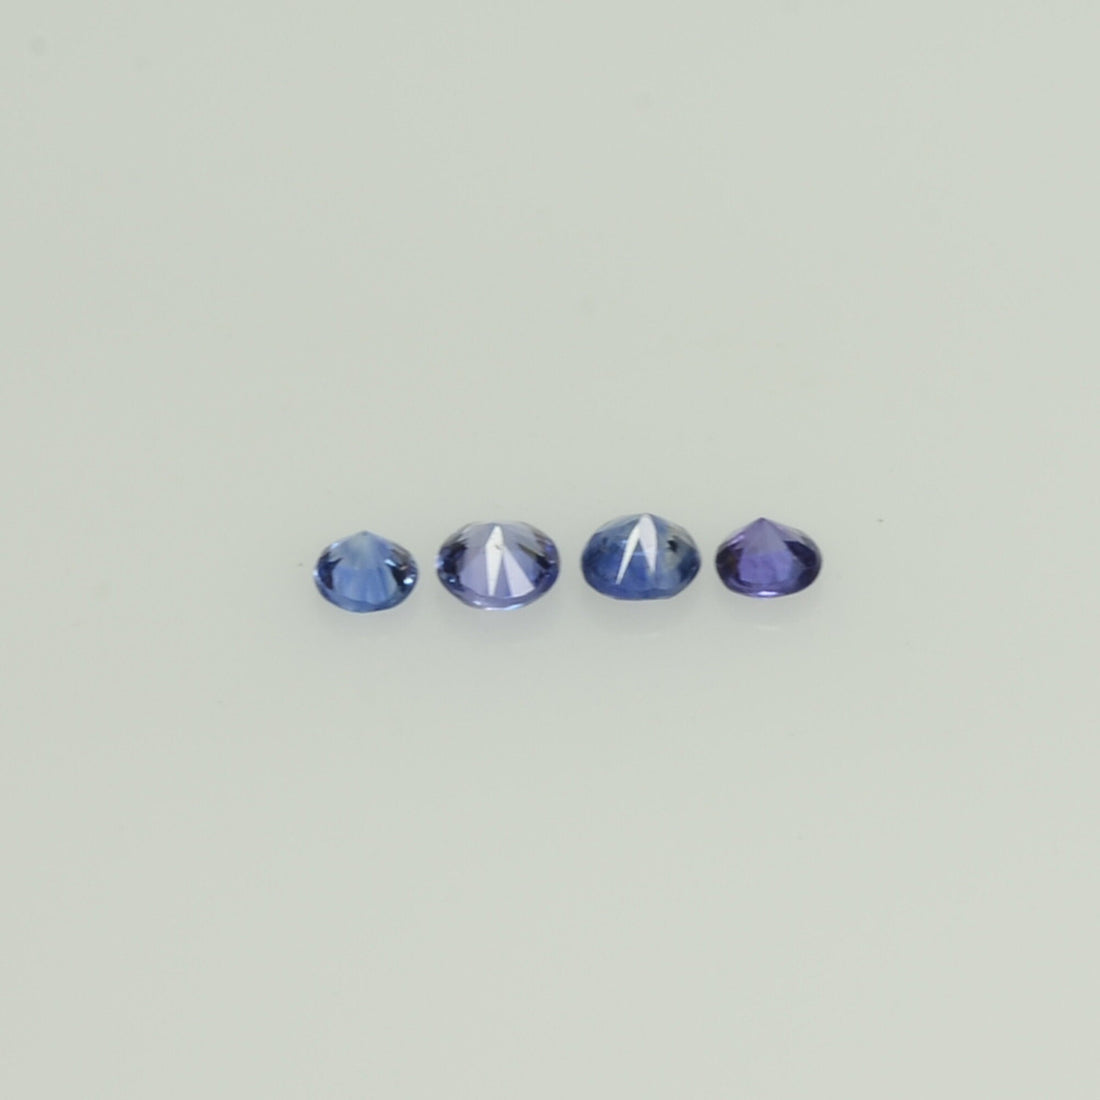 1.2 -4.0 mm Natural Blue Sapphire Loose Gemstone Round Diamond Cut Vs Quality Color